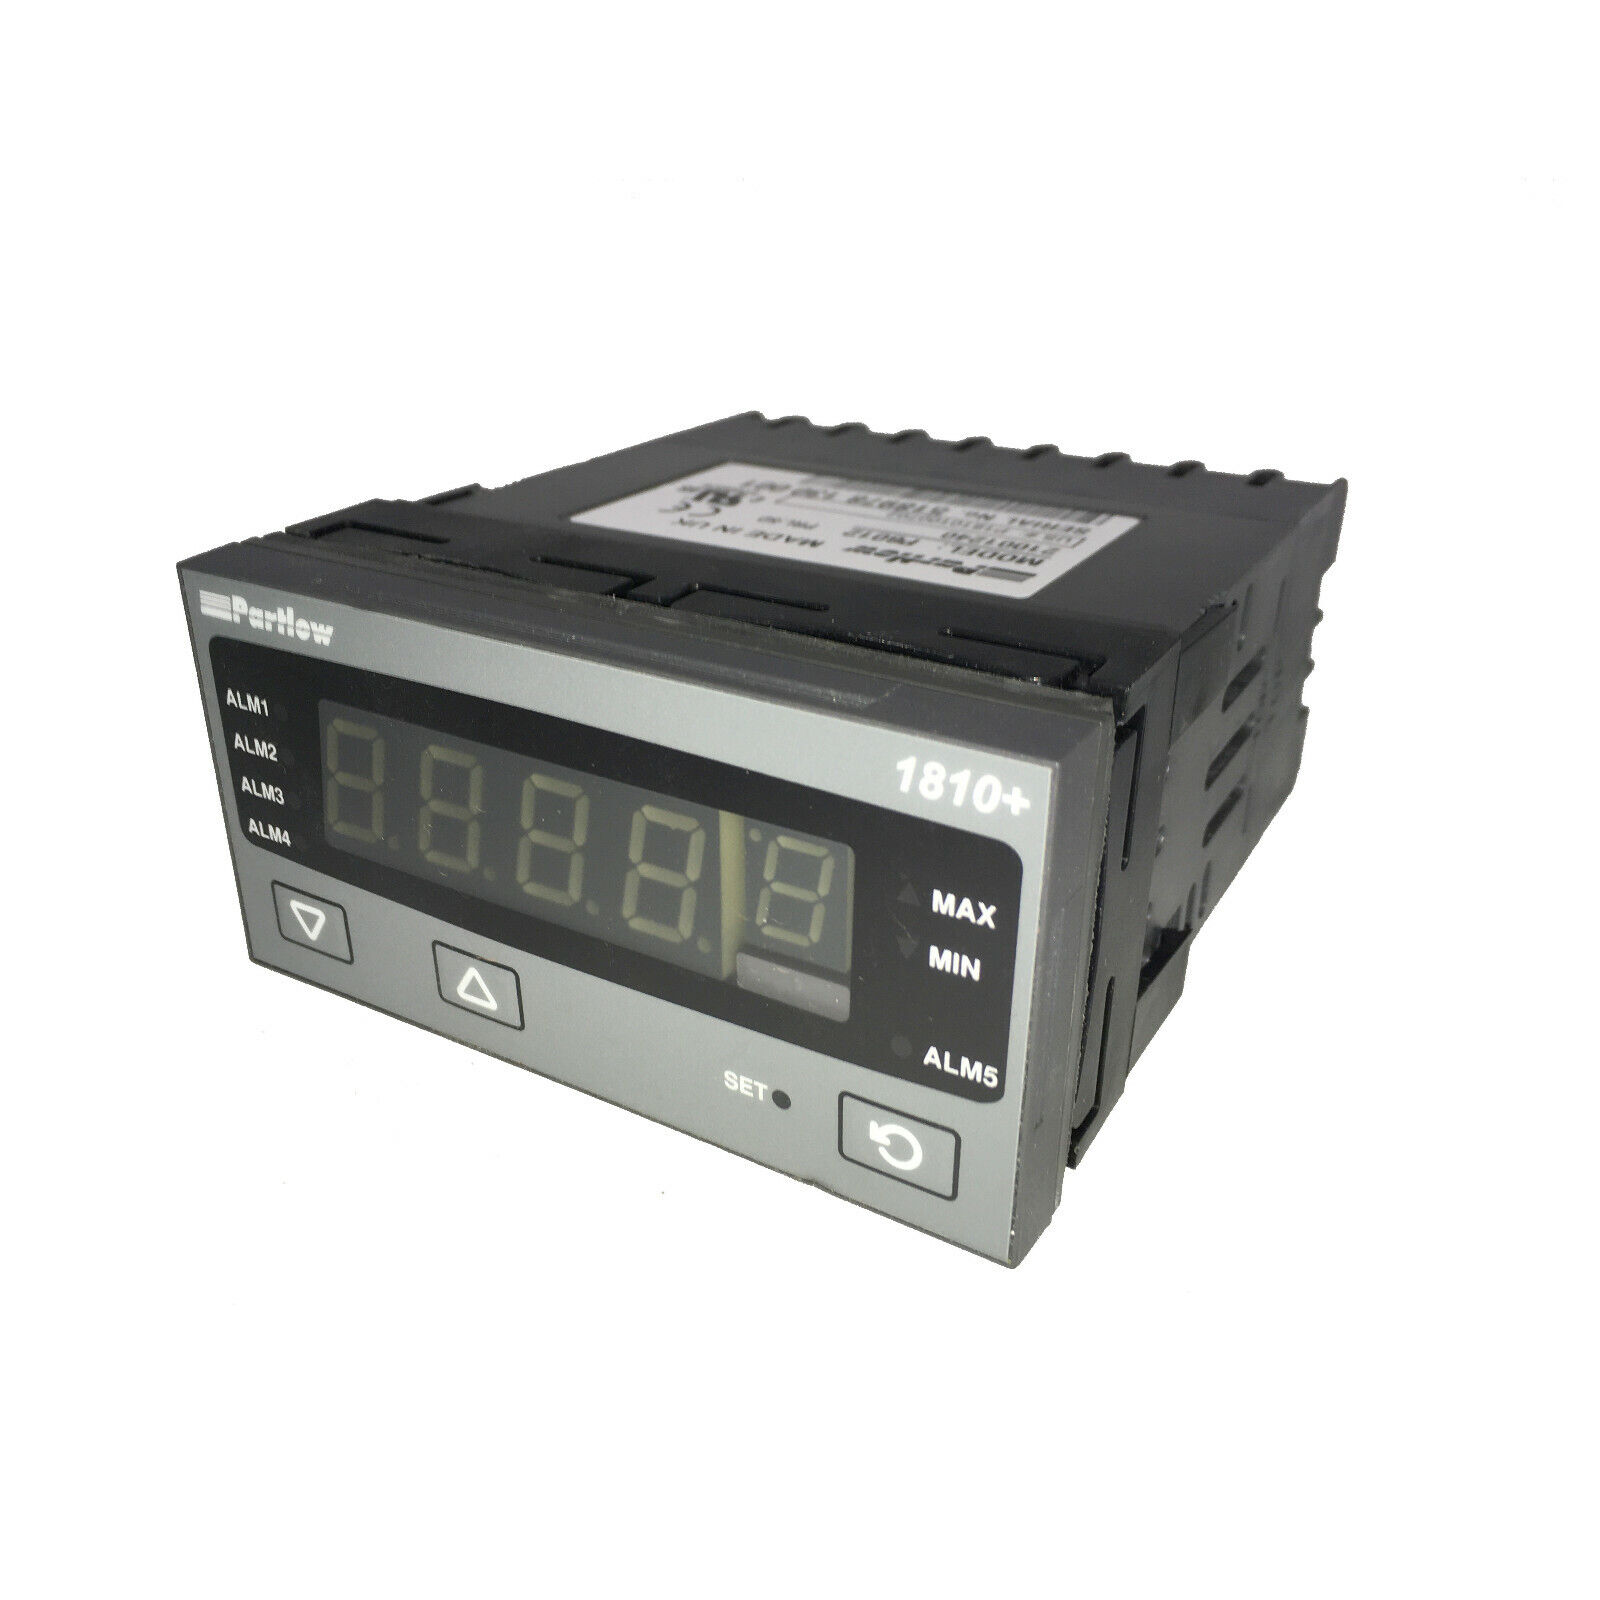 Partlow 1810+ P8012 Temperature Digital Panel Process Indicator